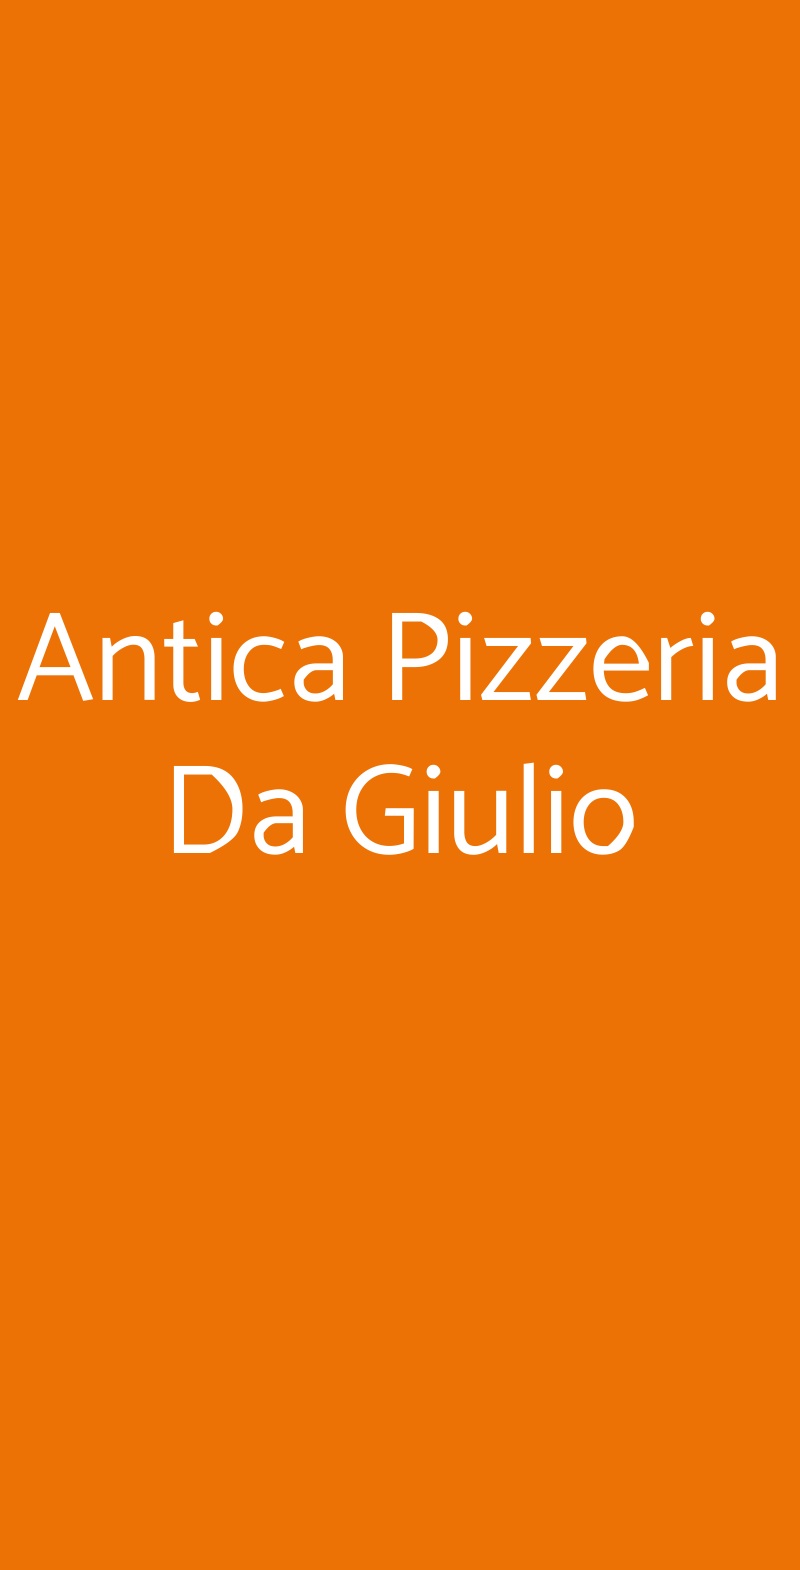 Antica Pizzeria Da Giulio Milano menù 1 pagina